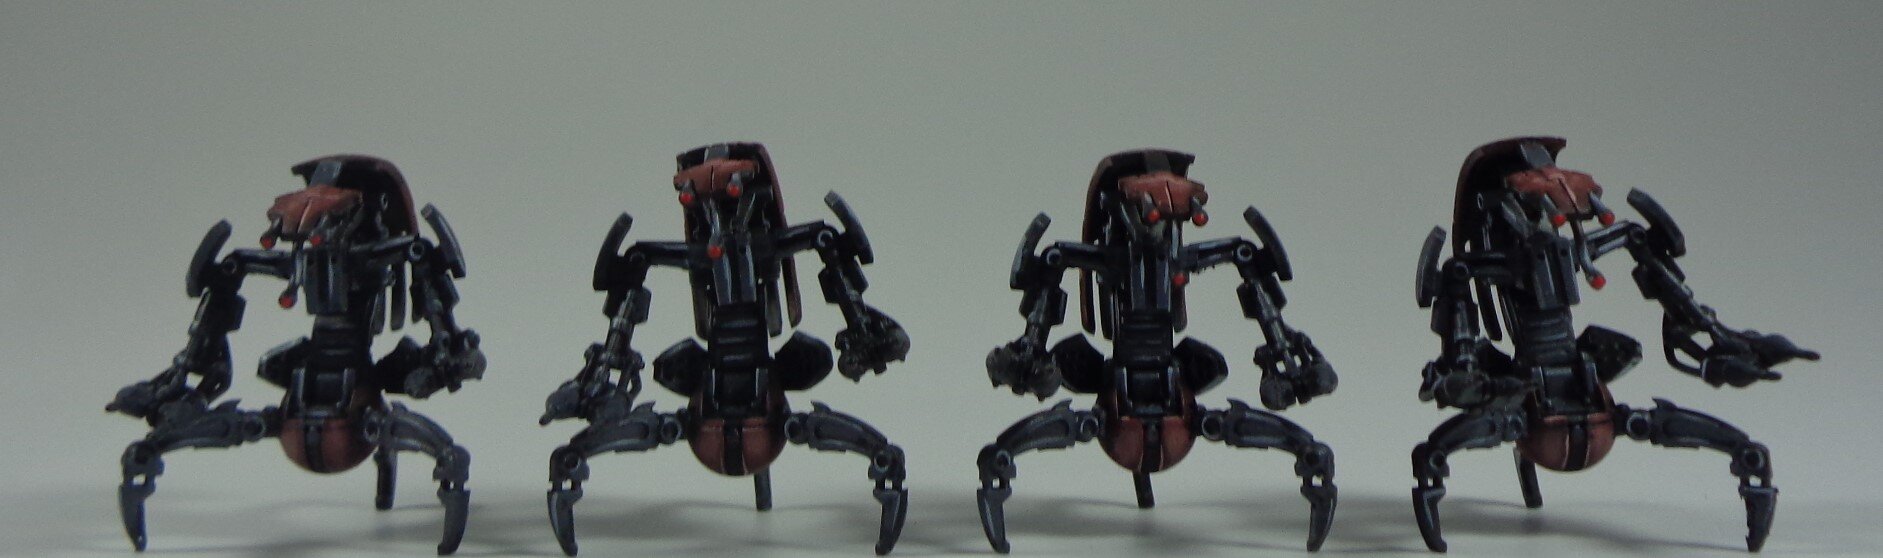 Star Wars Legion Miniature Painting Sevice Droidekas B-1 Droids Dooku Grevious (7).JPG